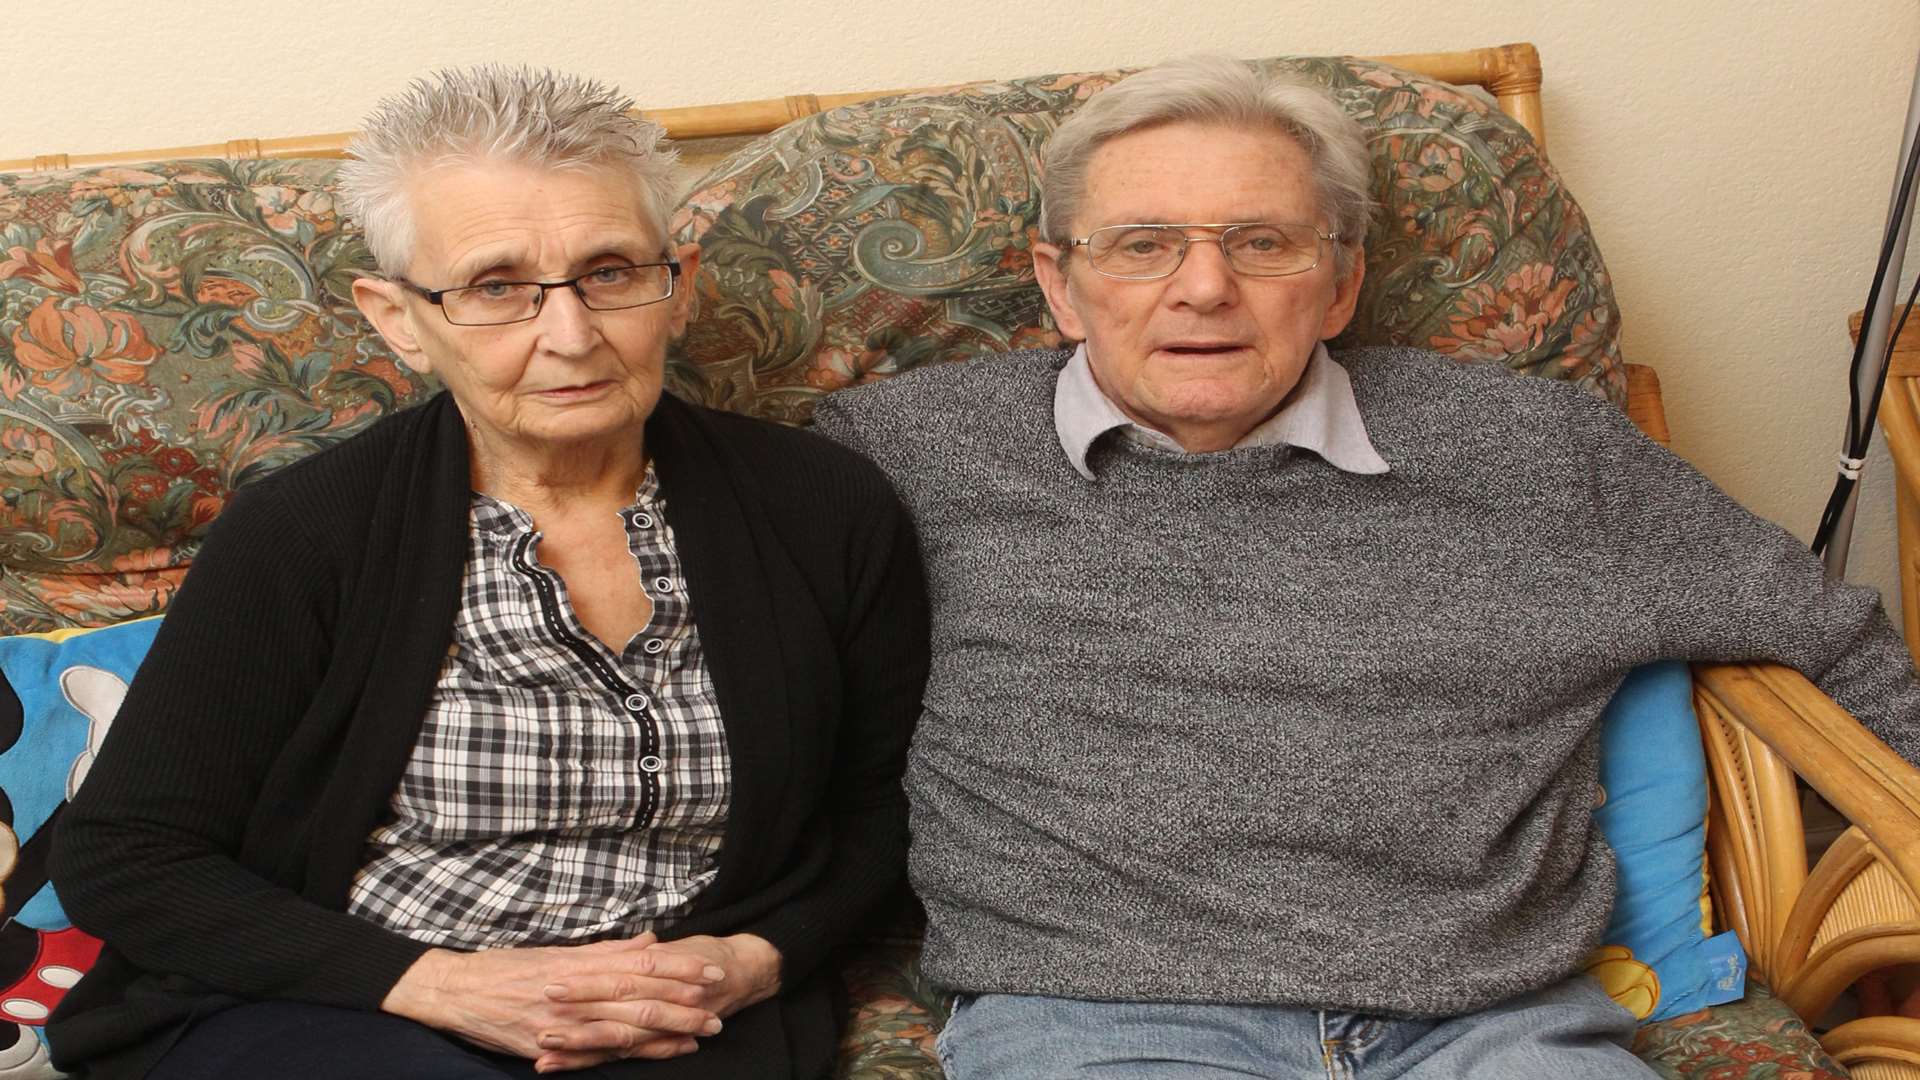 Patricia Tidbury, 73, with her husband, John. Picture: John Westhrop